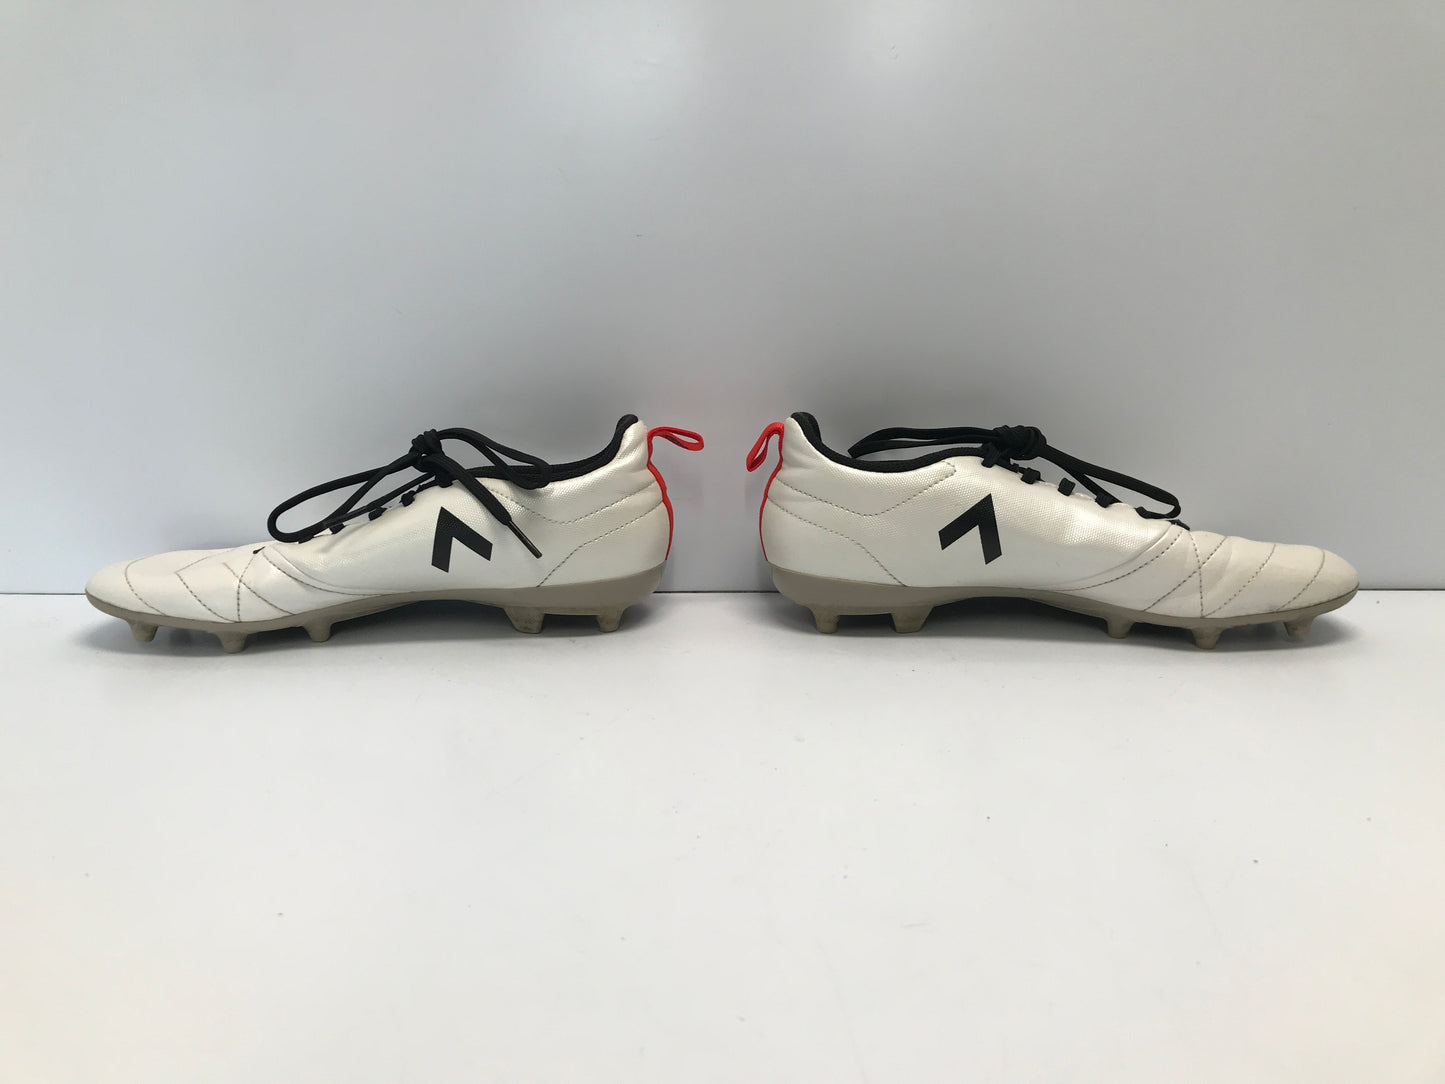 Soccer Shoes Cleats Men's Size 8.5 Adidas White Black